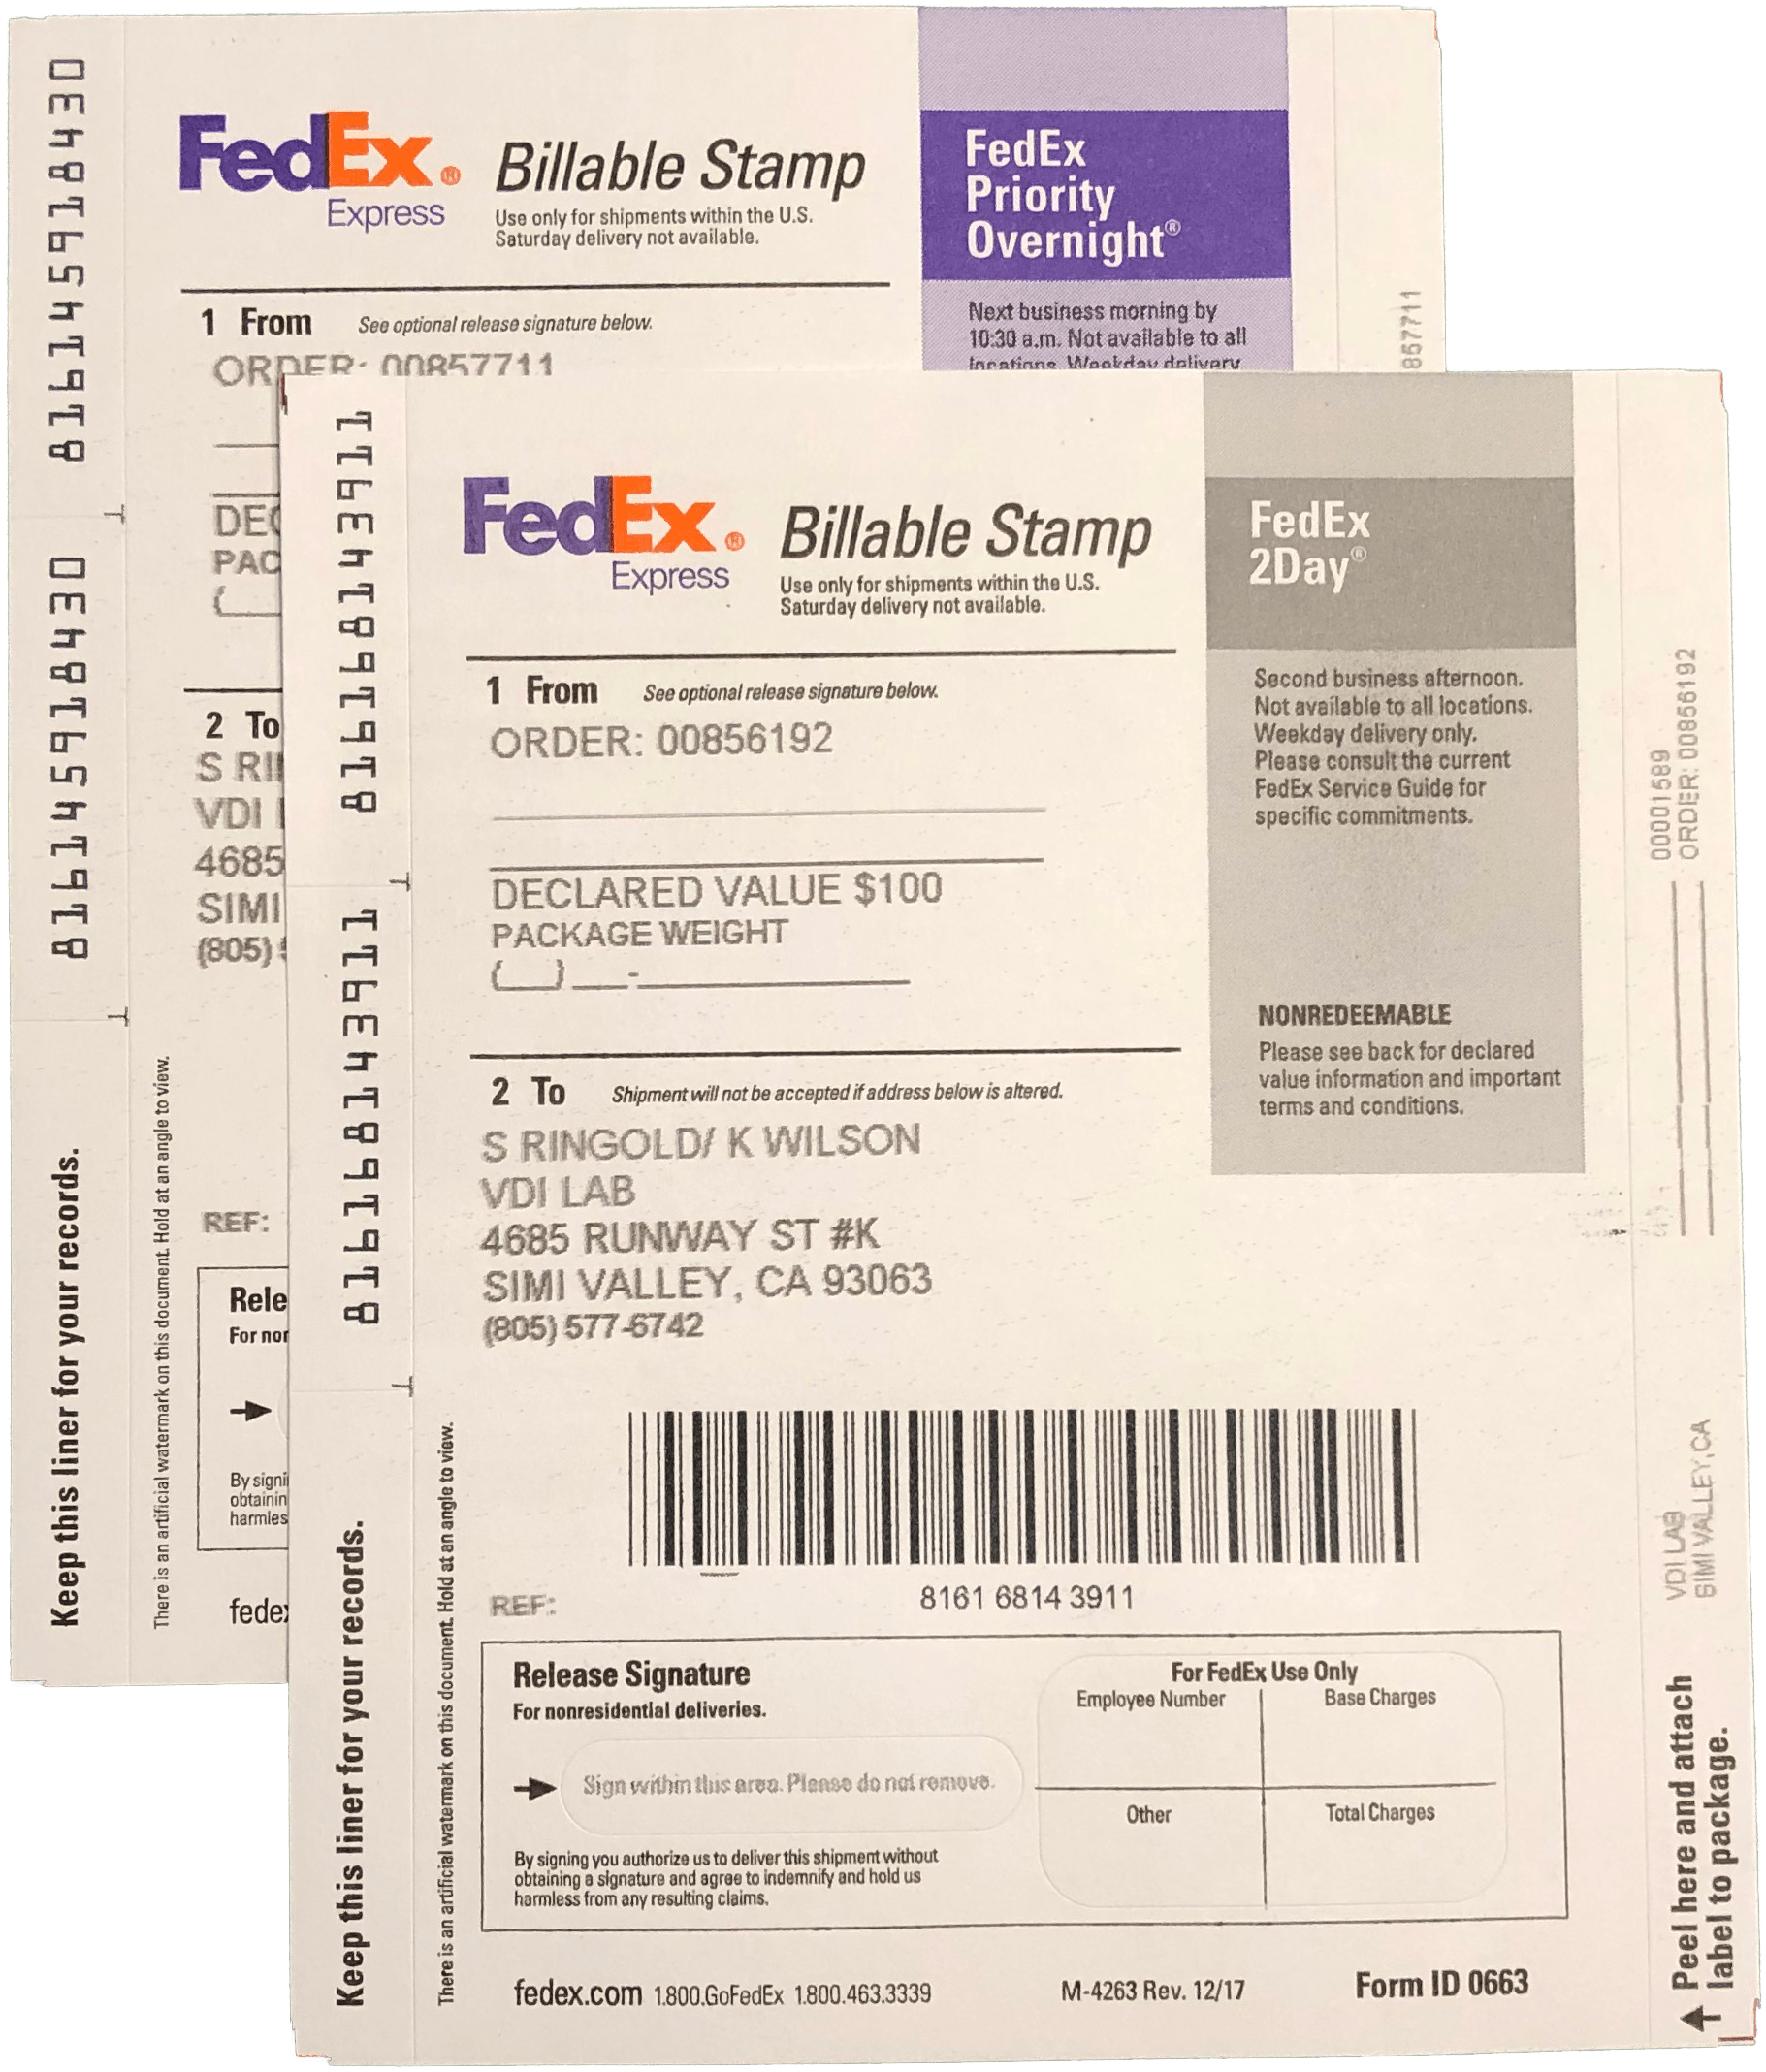 fedex ground return label tracking number